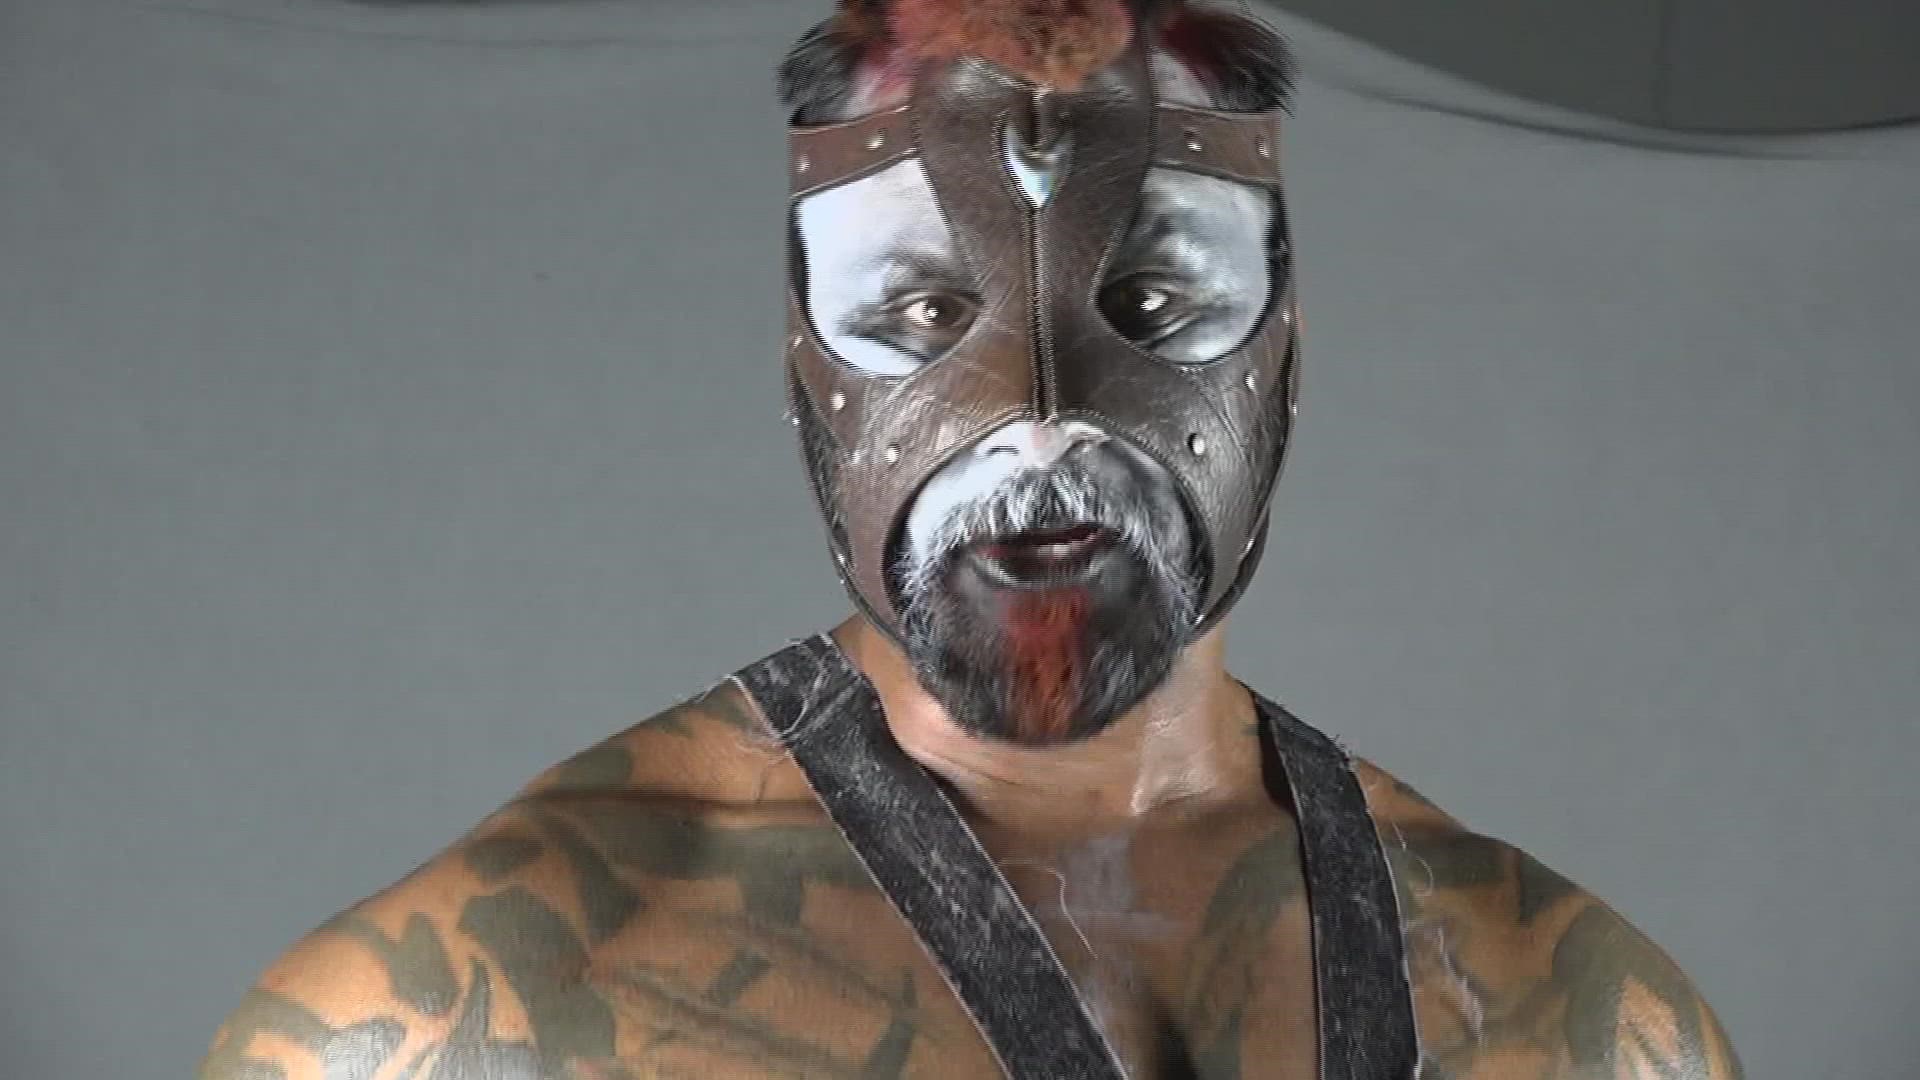 Area wrestler's intimidating alter ego brings joy to families through Hurricane Pro Wrestling.